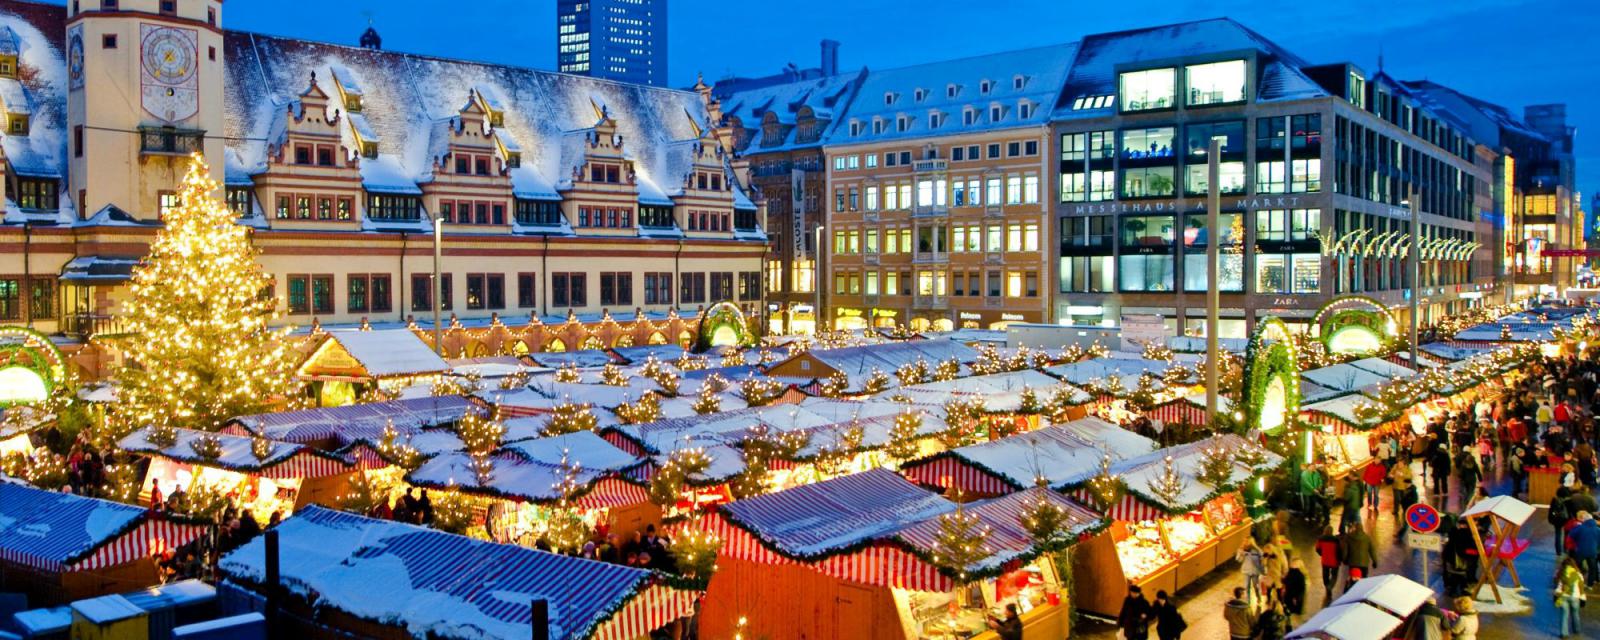 Kerstmarkten Special - Leipzig 